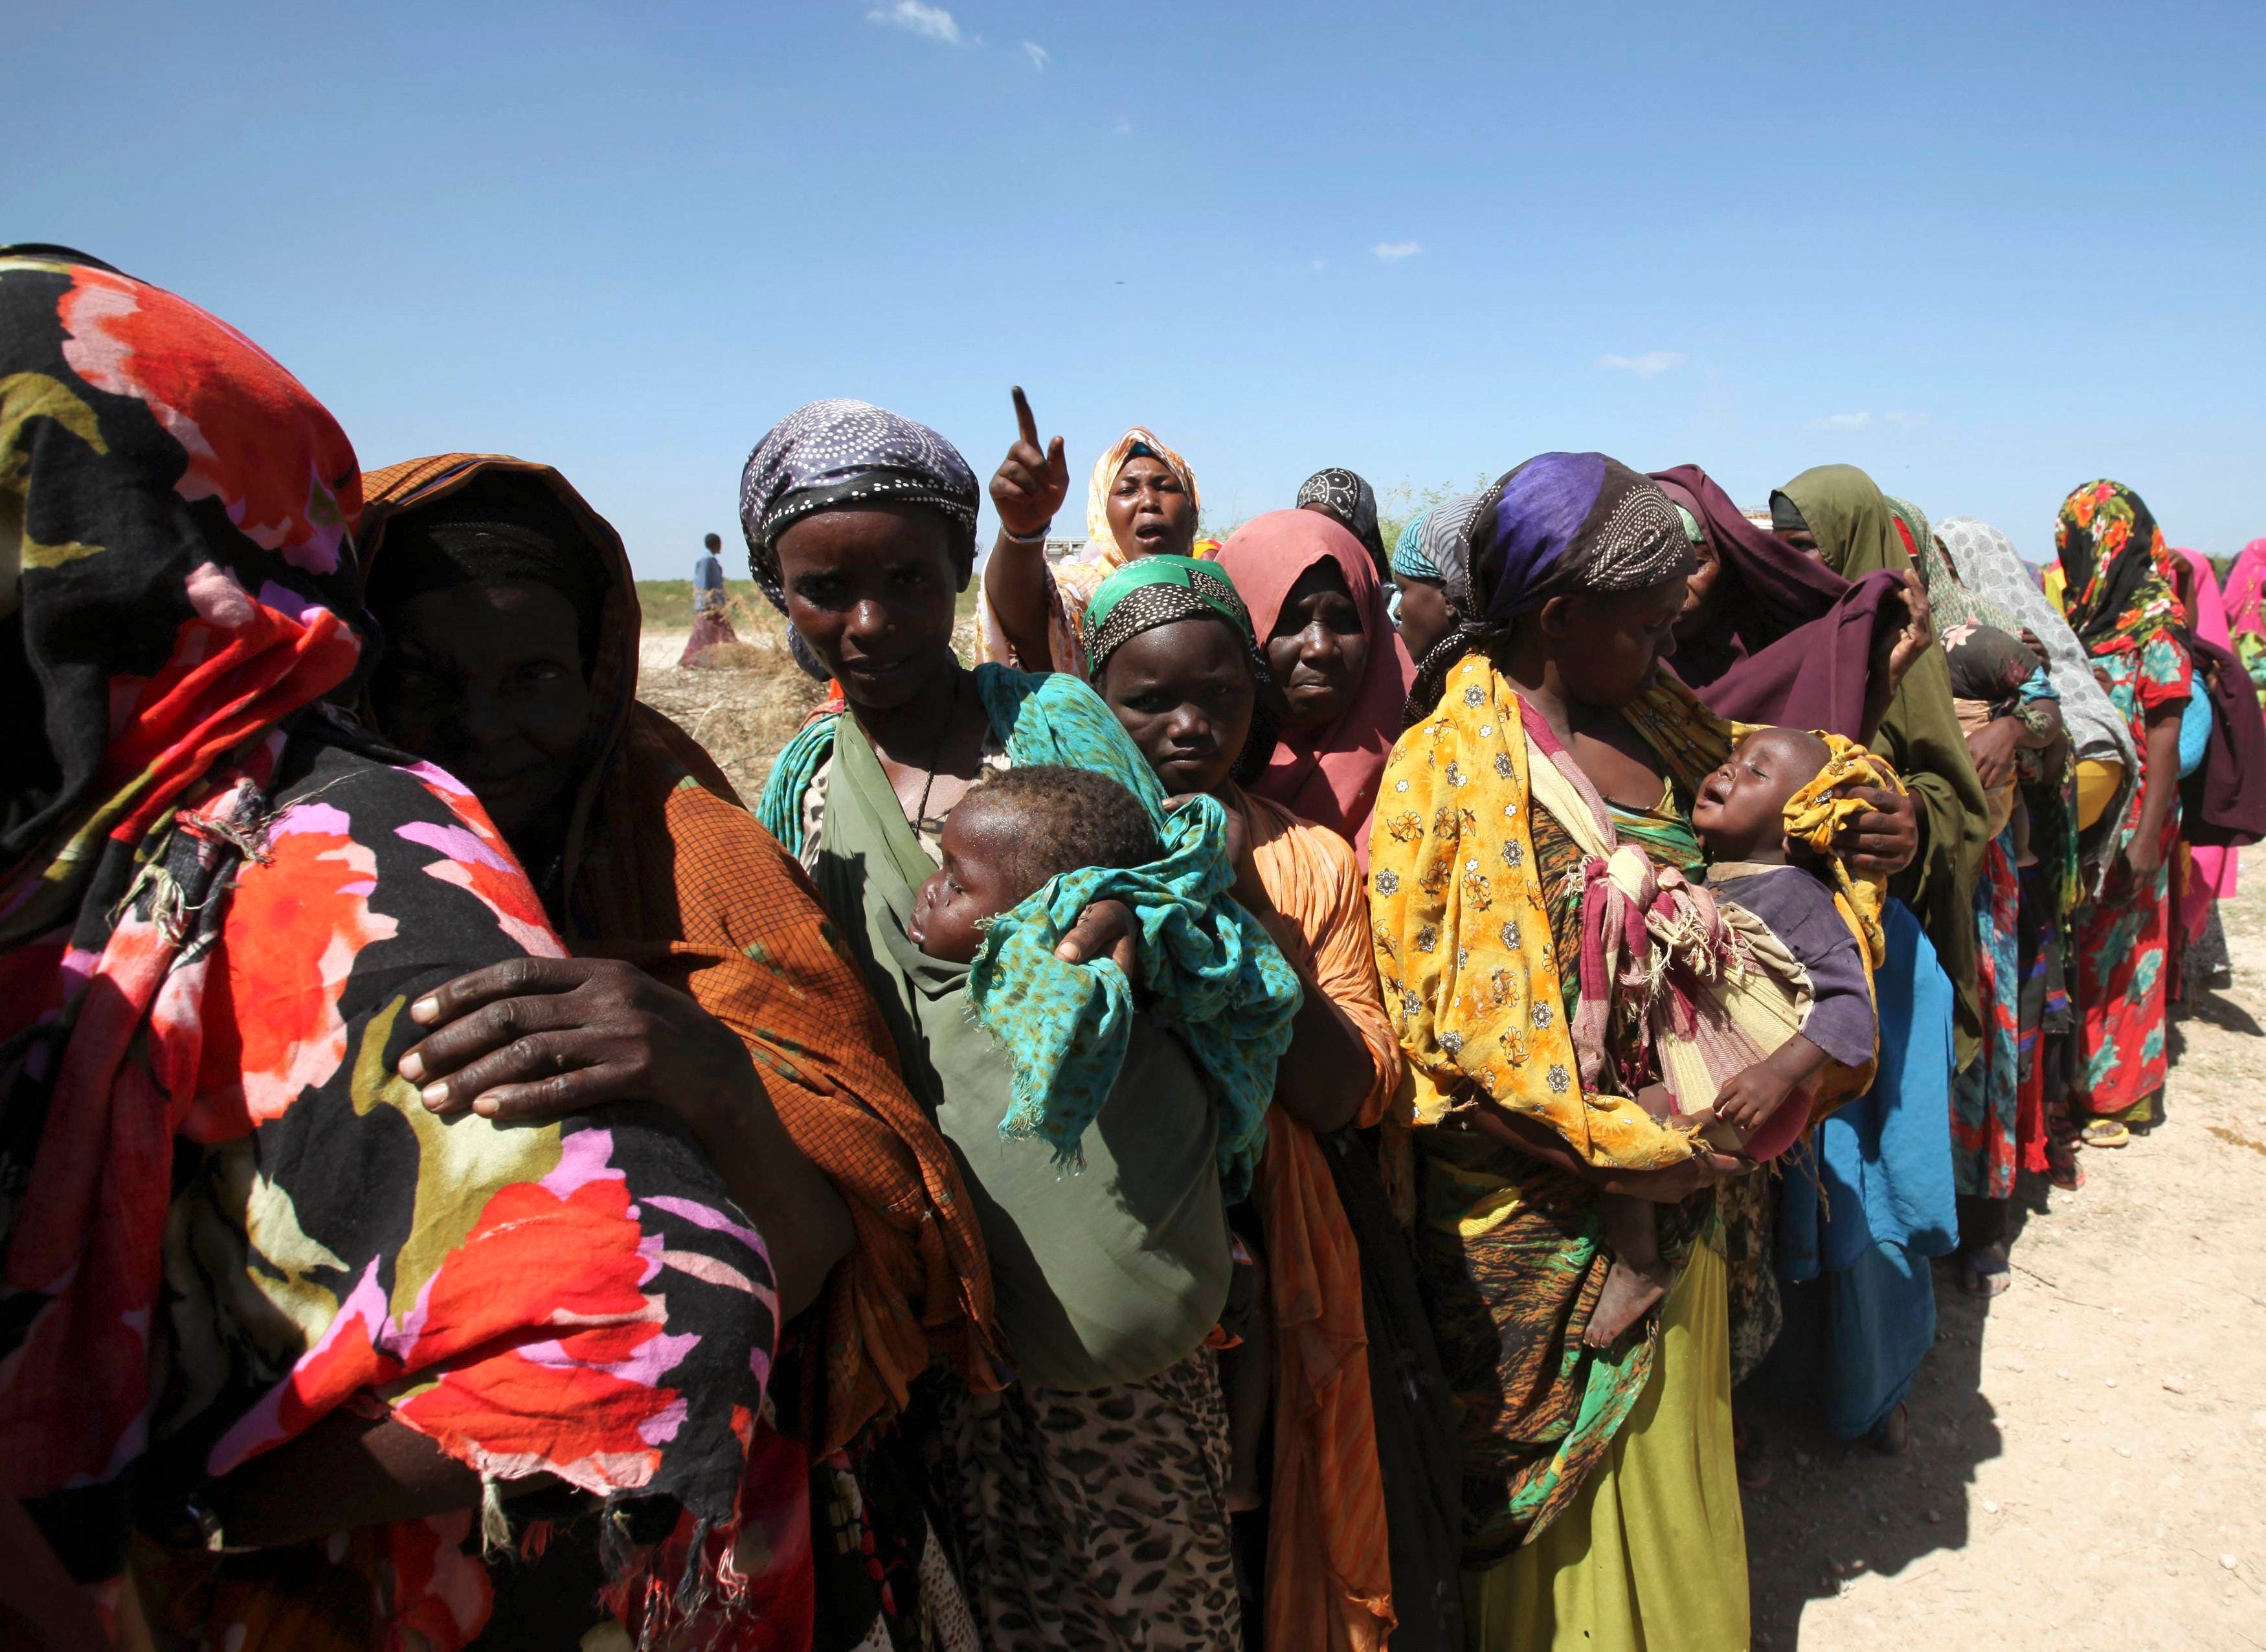 Flood washes away food for Somalis - Al Arabiya English